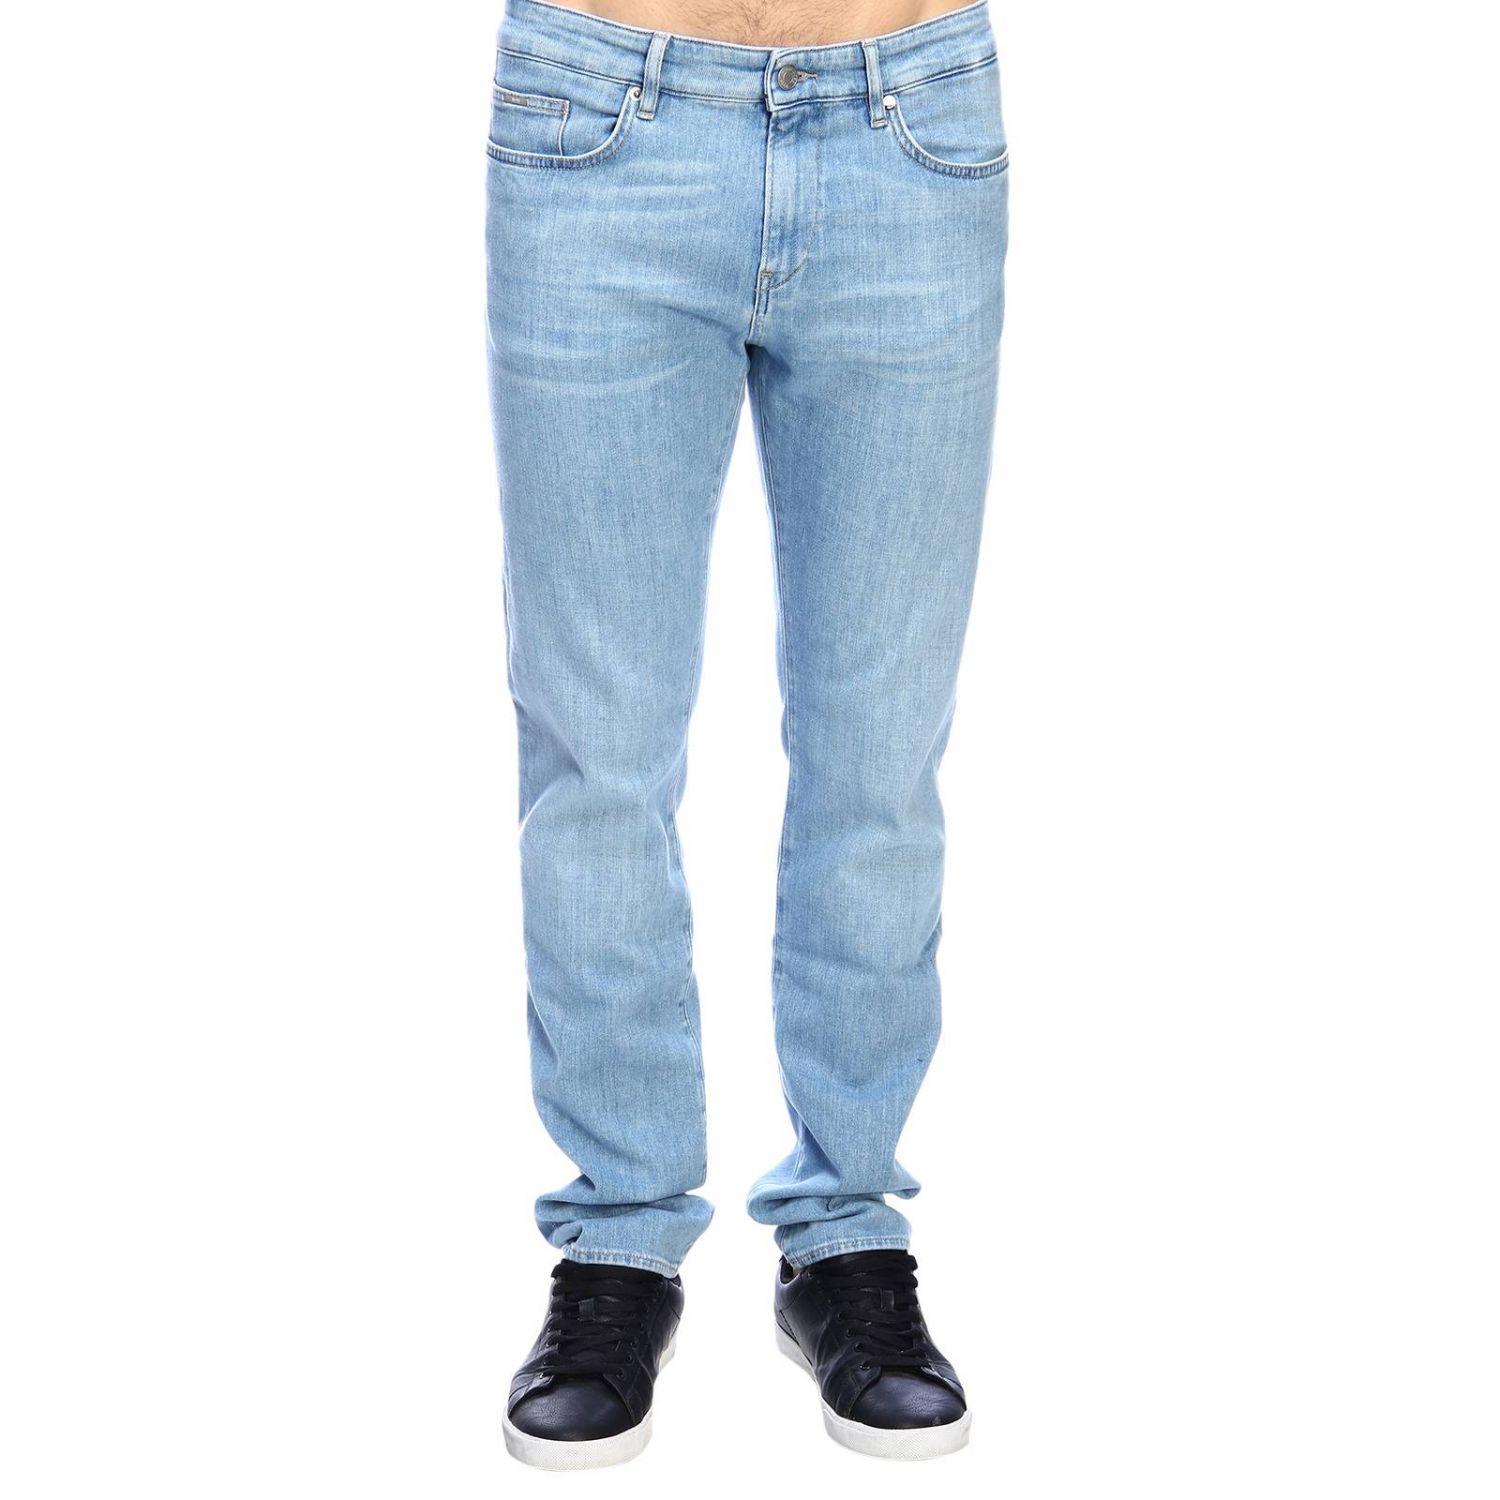 Hugo Boss Outlet: Jeans uomo | Jeans Hugo Boss Uomo Denim | Jeans Hugo Boss  3110215848 DELAWARE Giglio IT